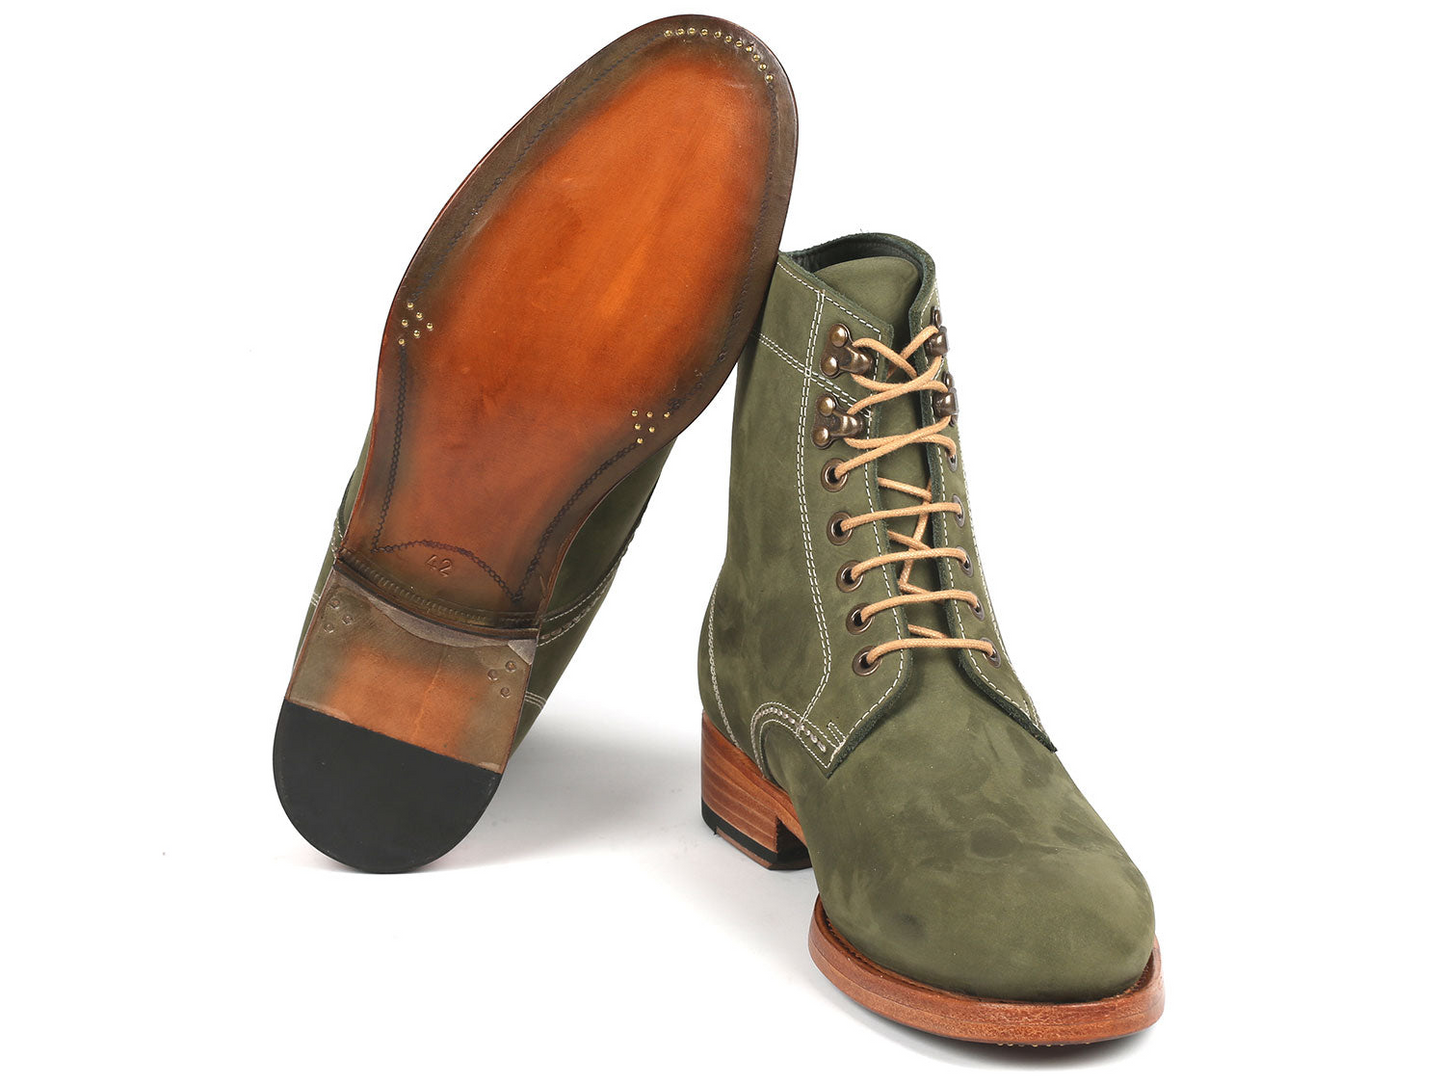 Green Nubuck boots, Handmade to order.